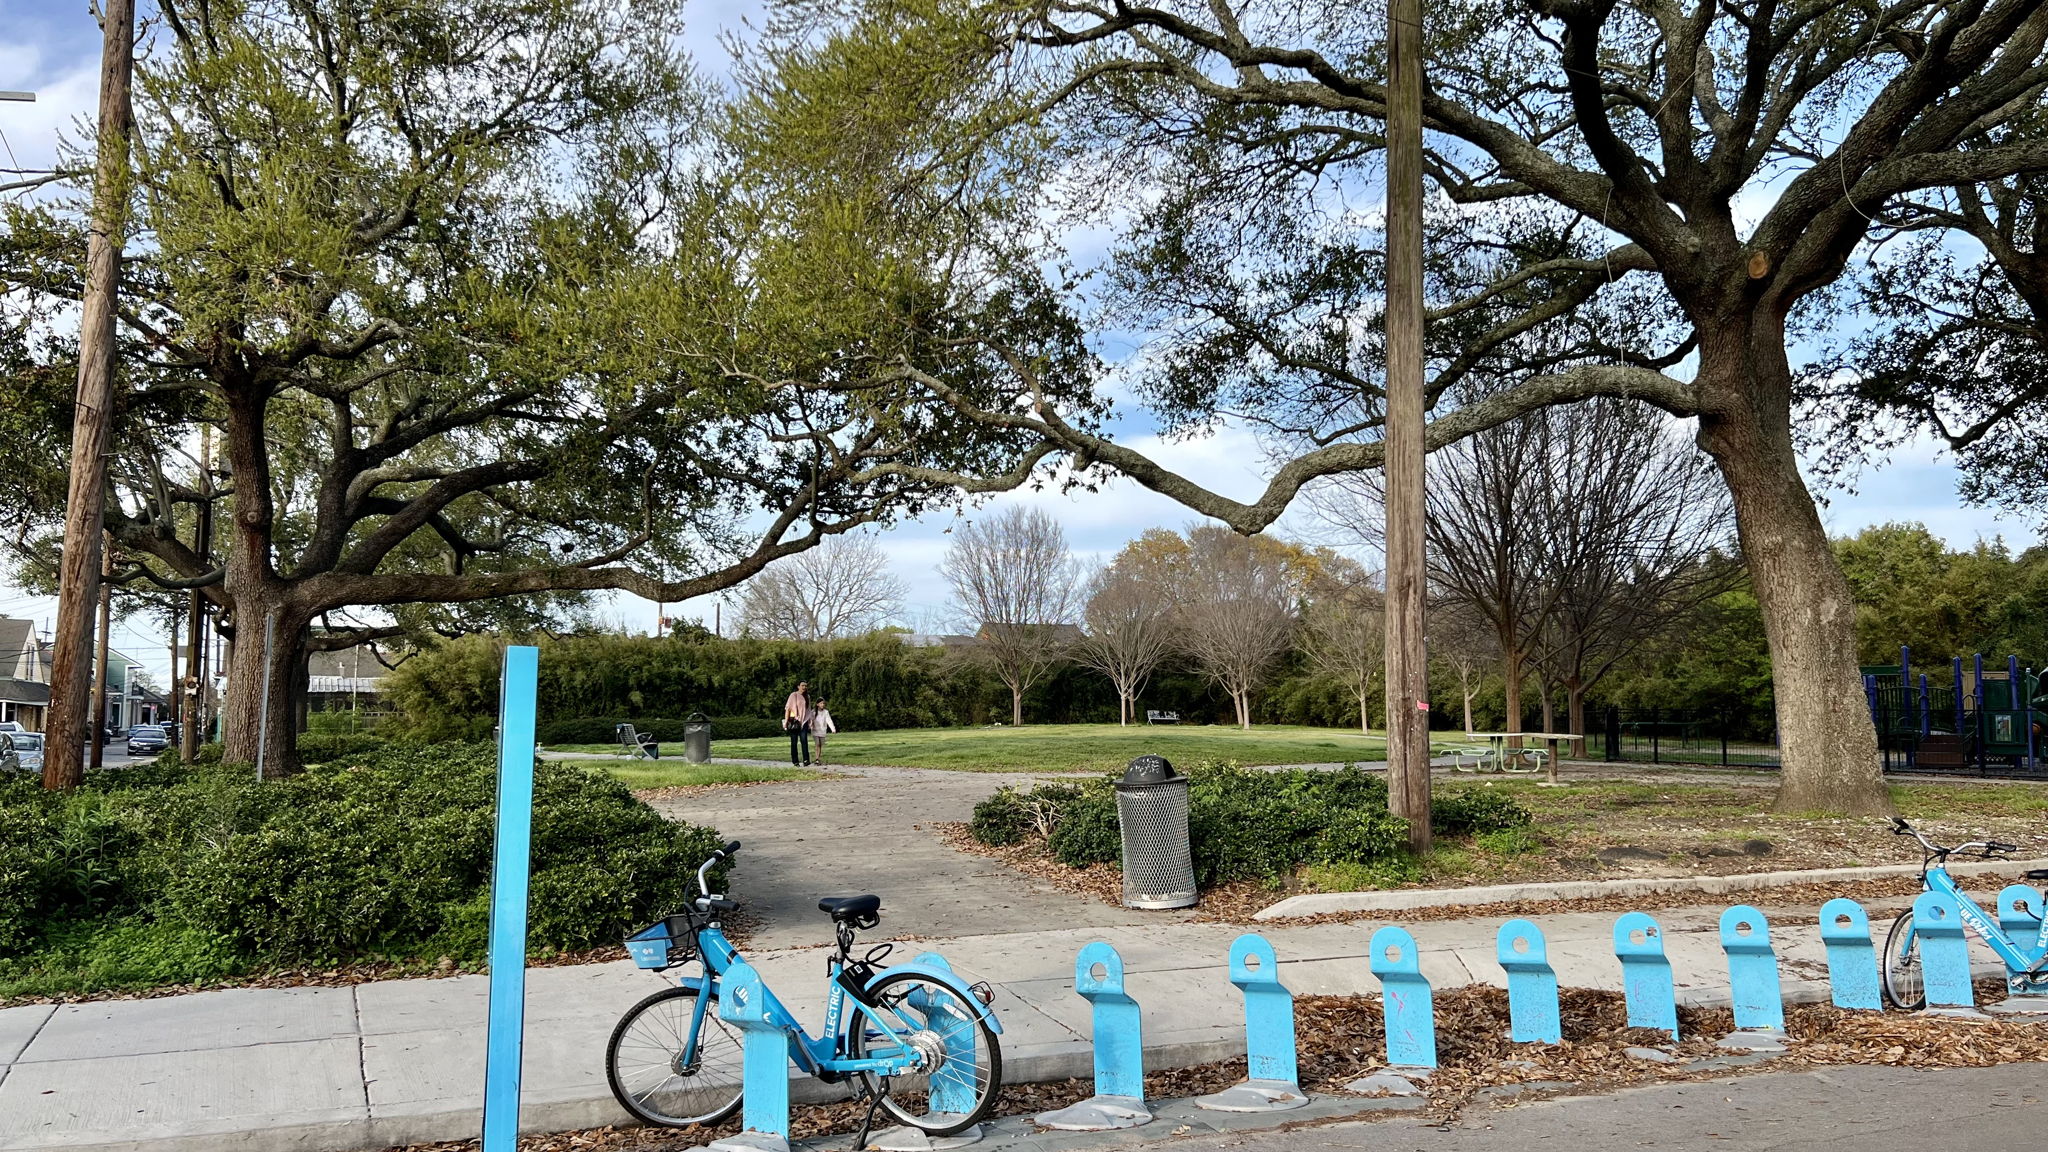 Markey Park has a playground and bike share station